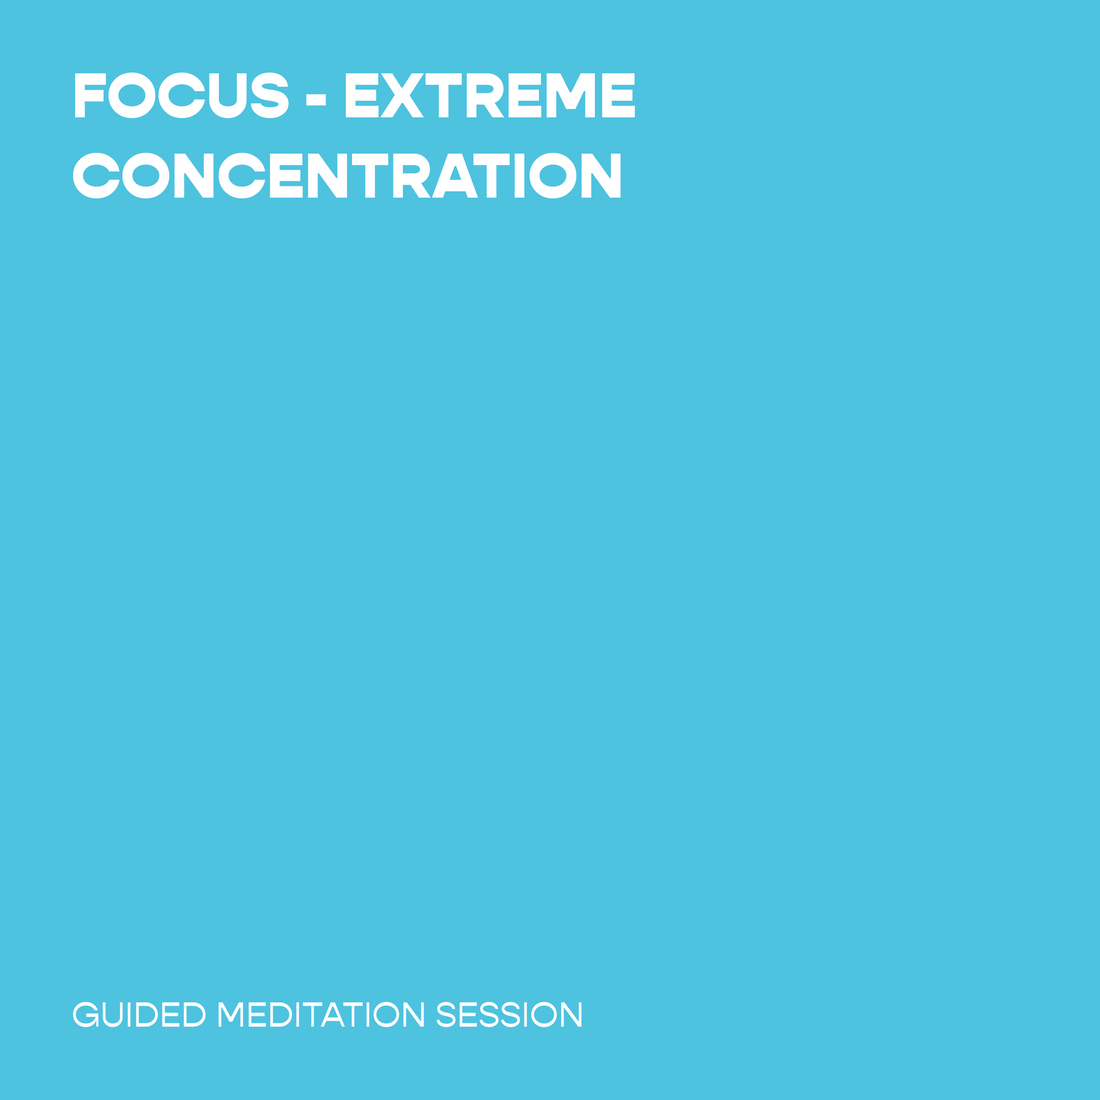 Focus - Extreme Concentration